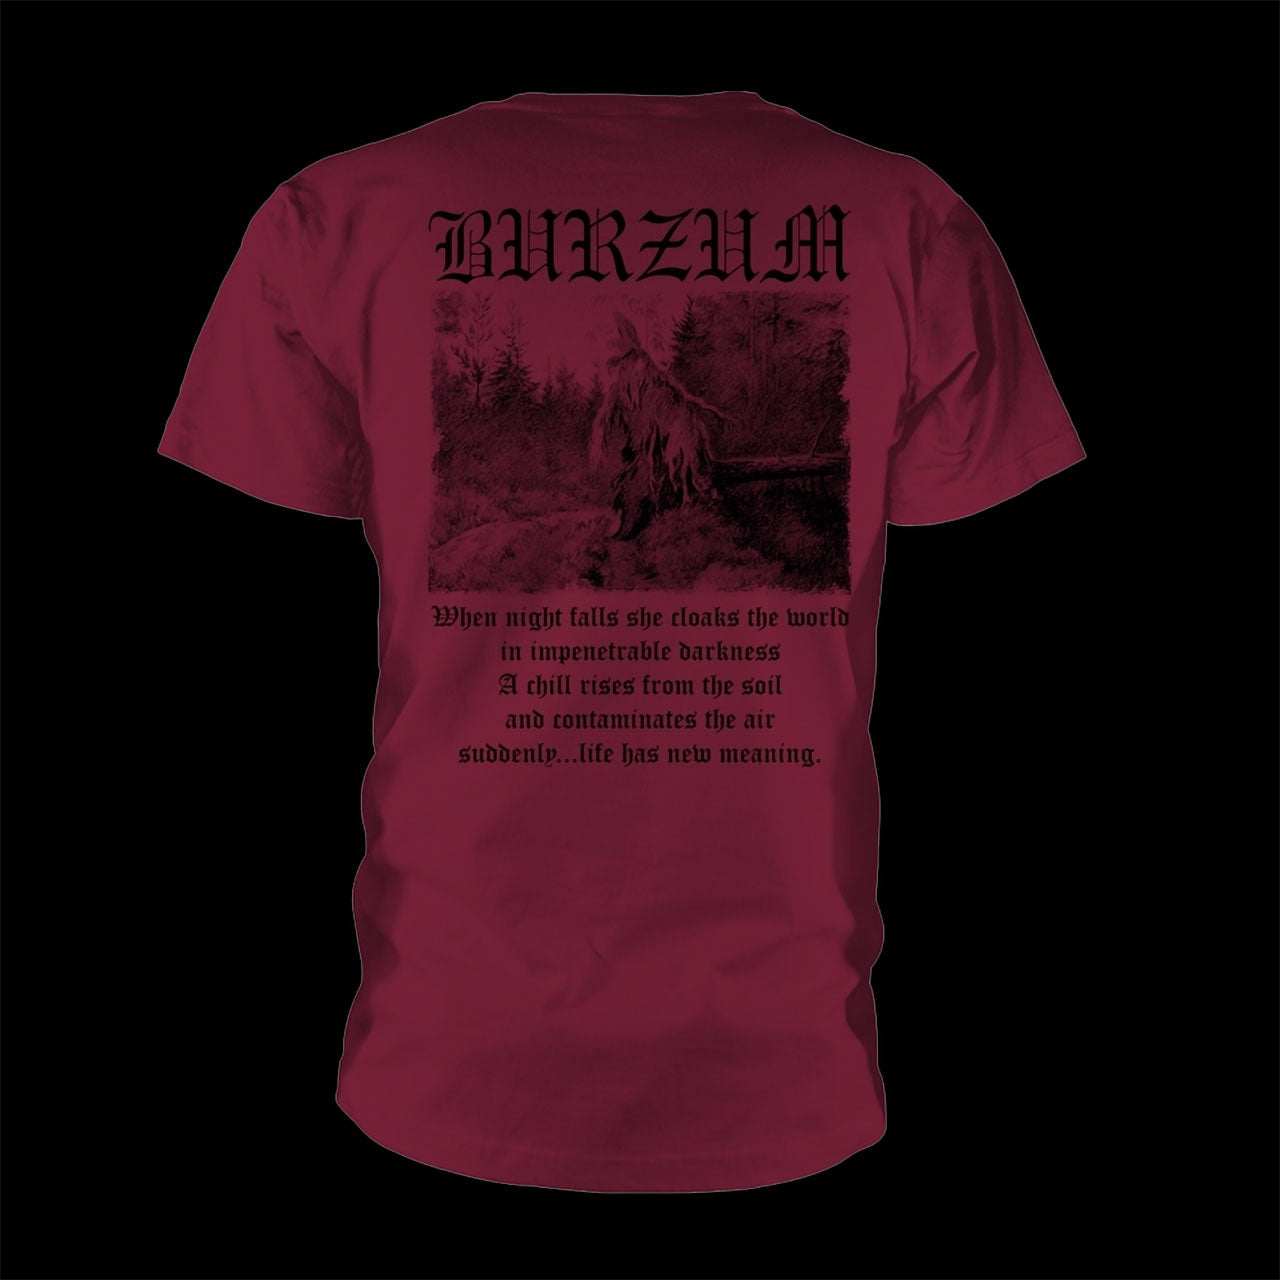 Burzum - Filosofem (Maroon & Black) (T-Shirt)